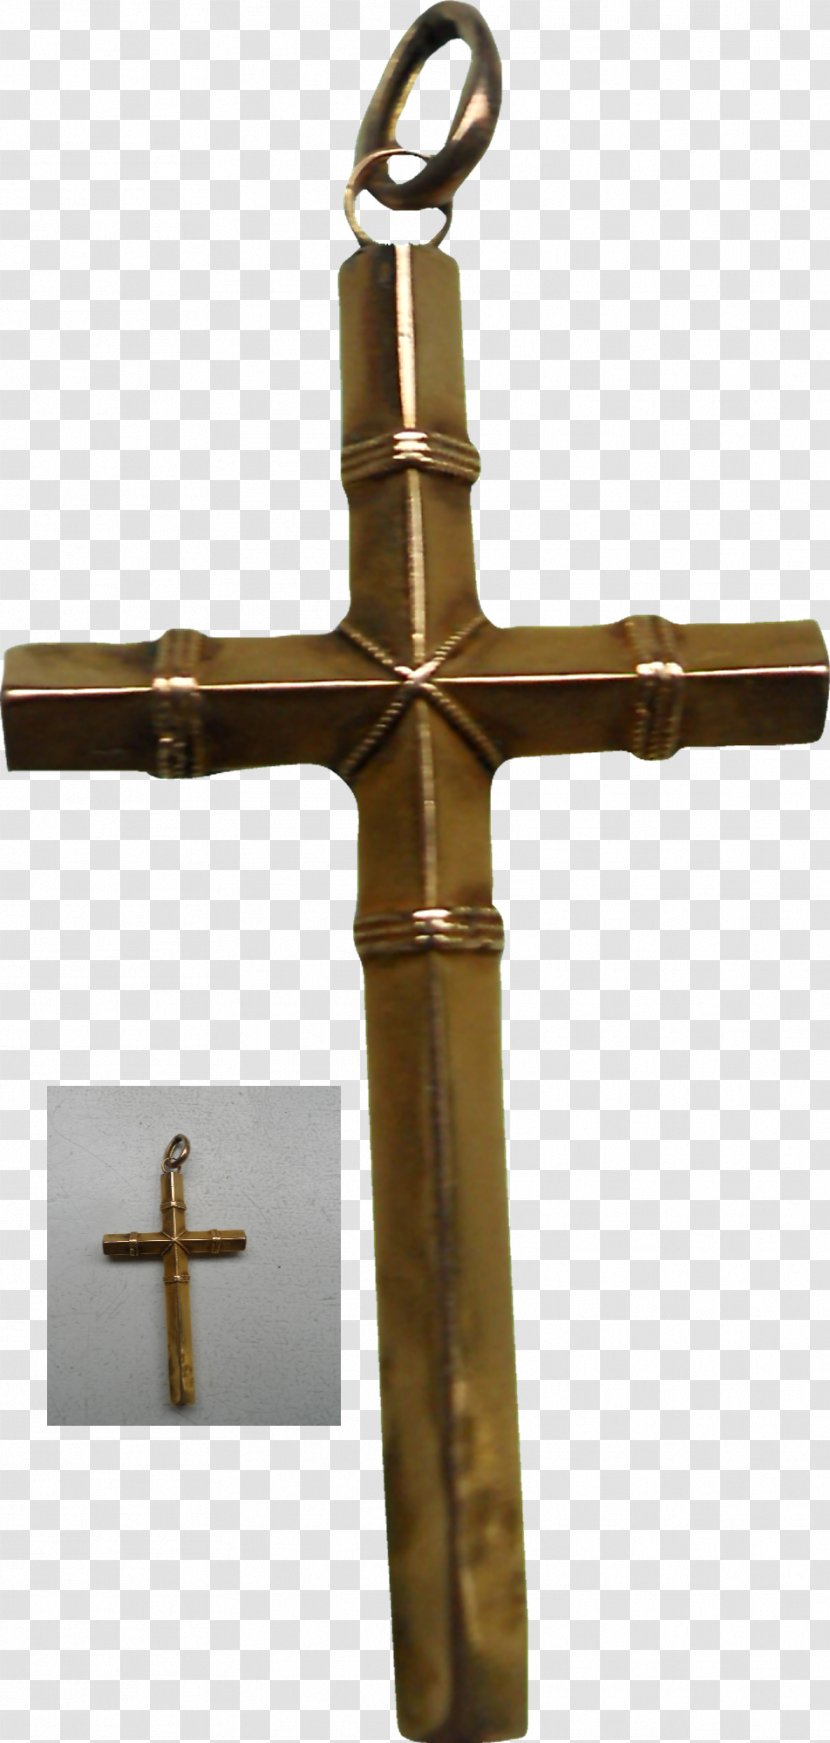 Crucifix Brass 01504 - Religious Item Transparent PNG